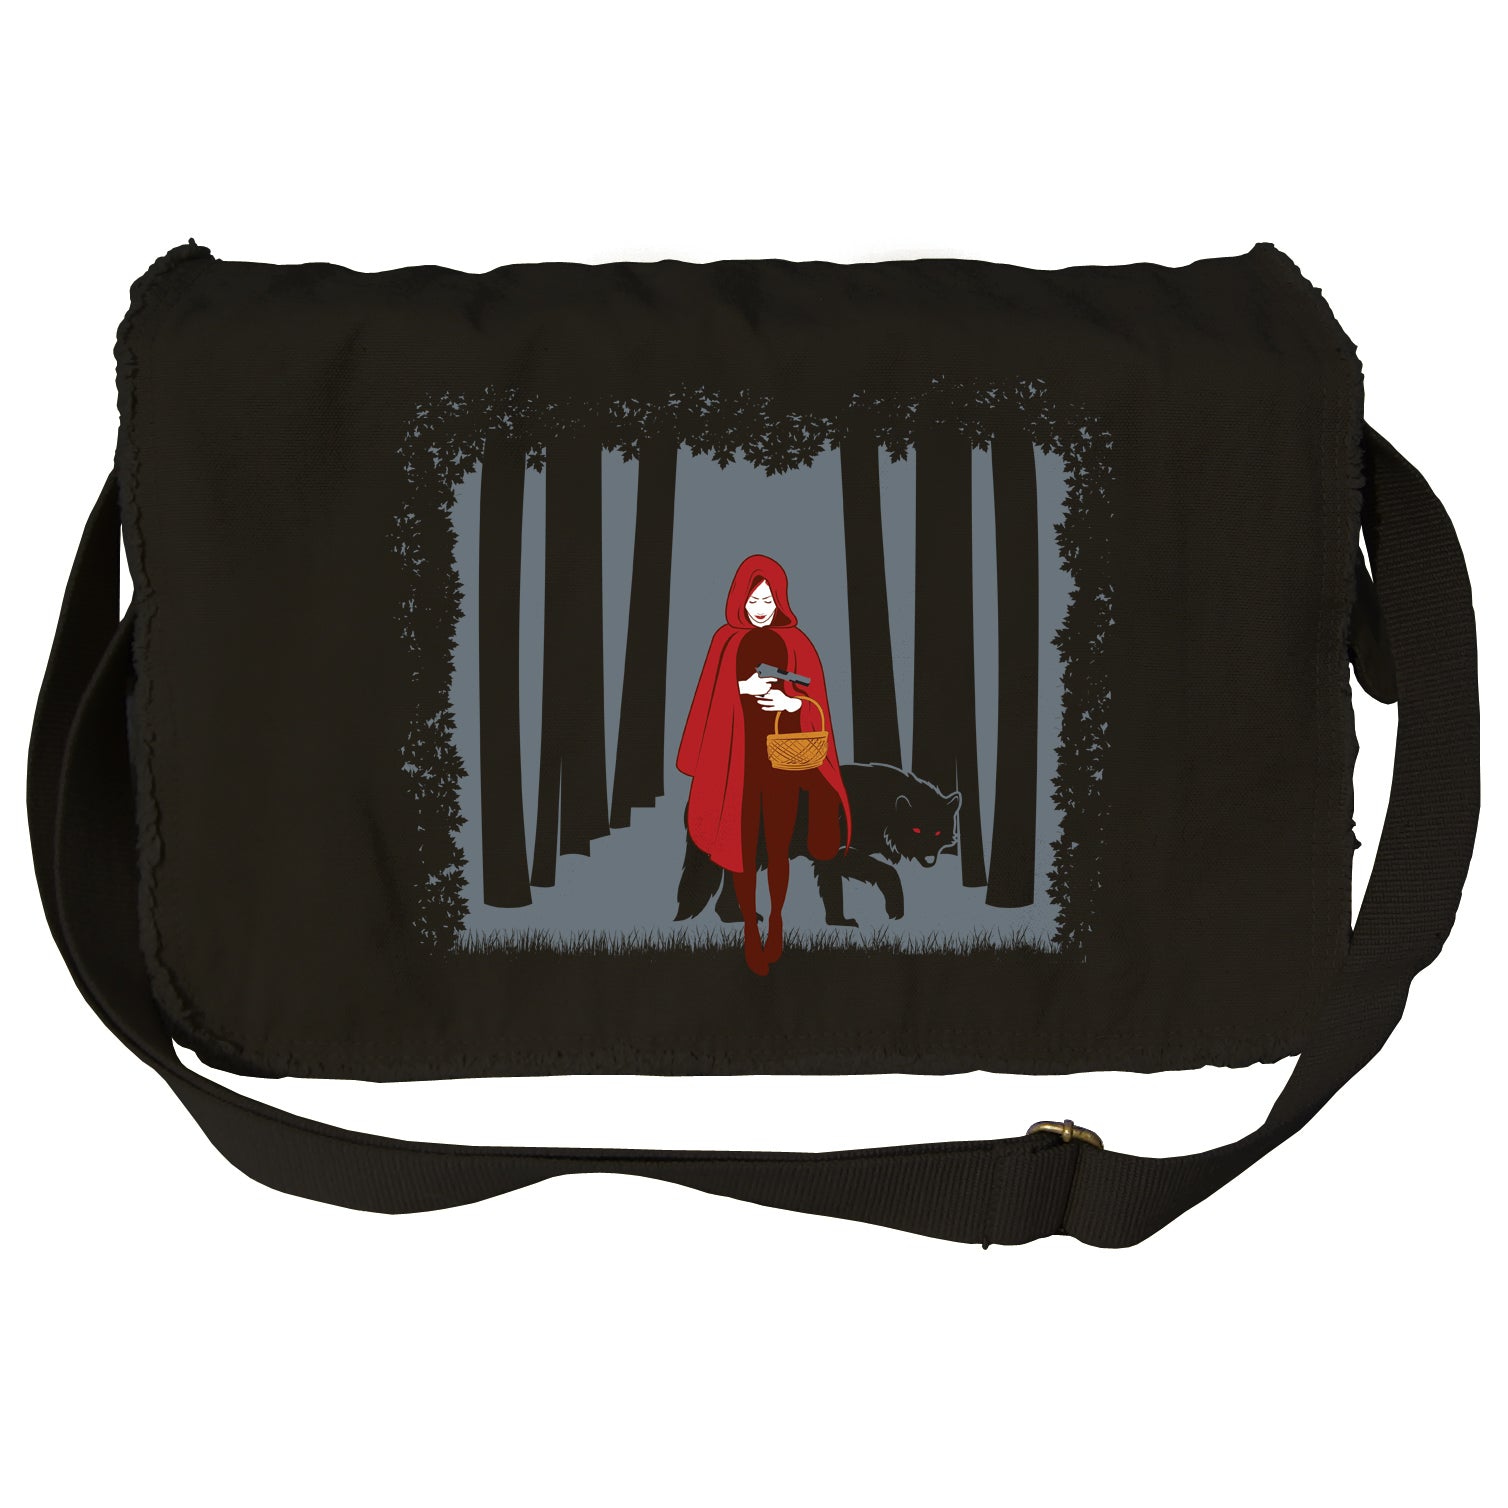 Red Riding Hood Messenger Bag - By Ex-Boyfriend